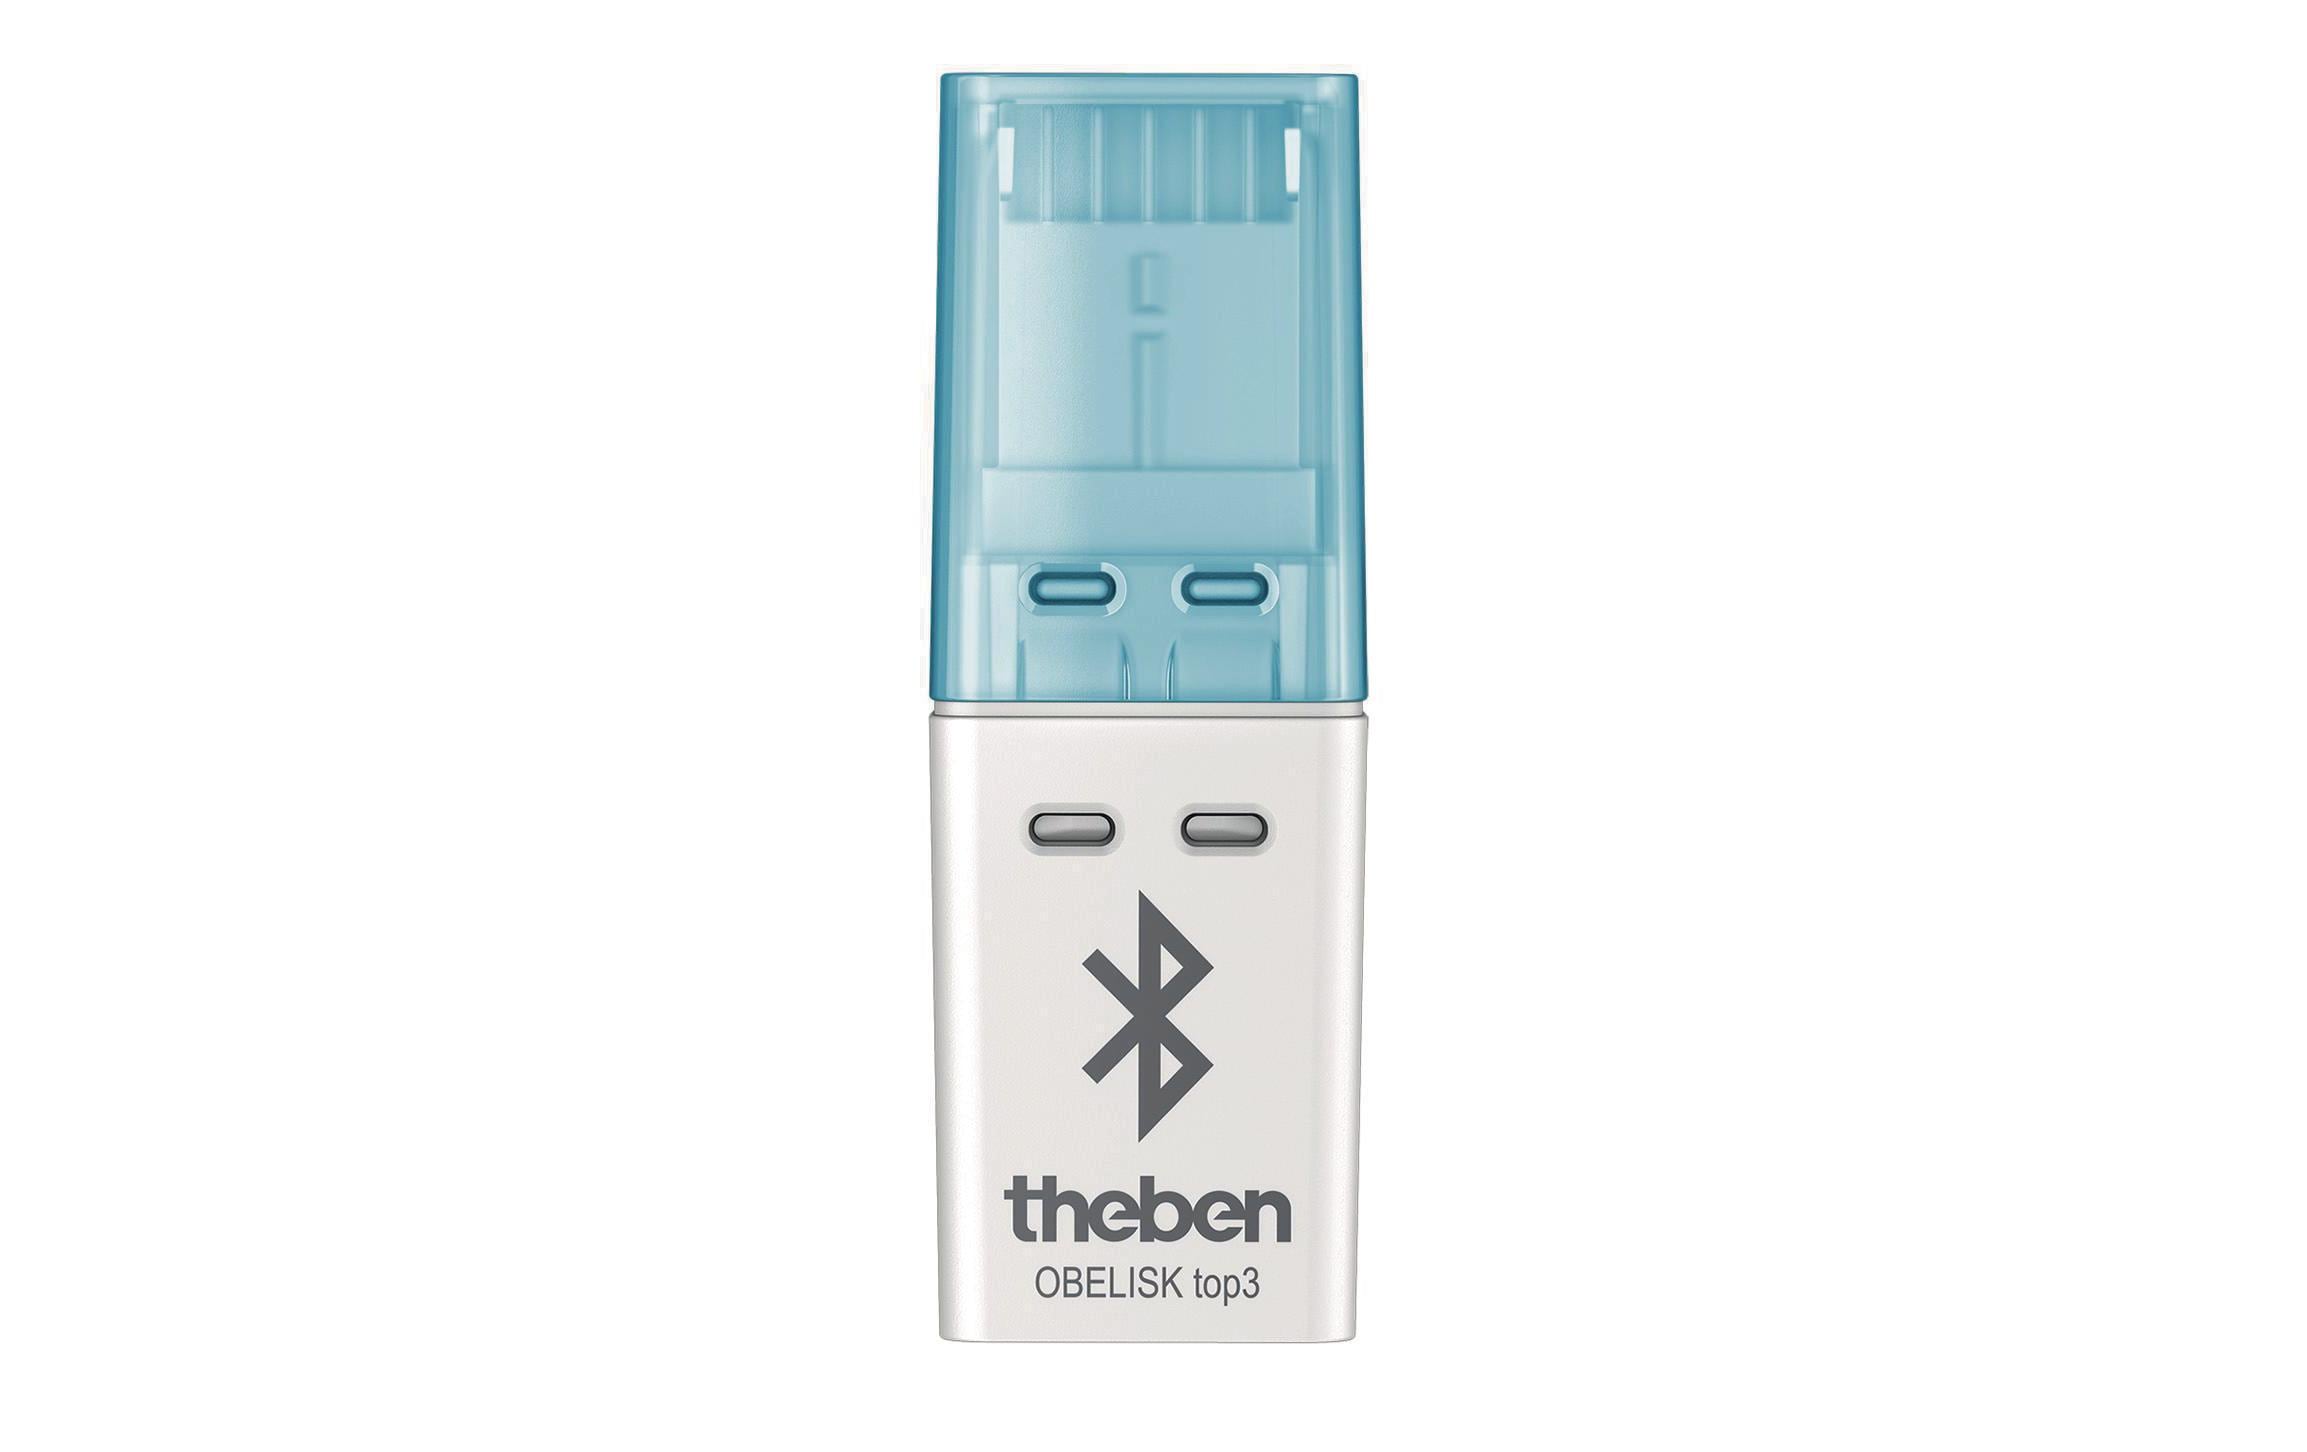 Theben-HTS Bluetooth-Adapter OBELISK top3